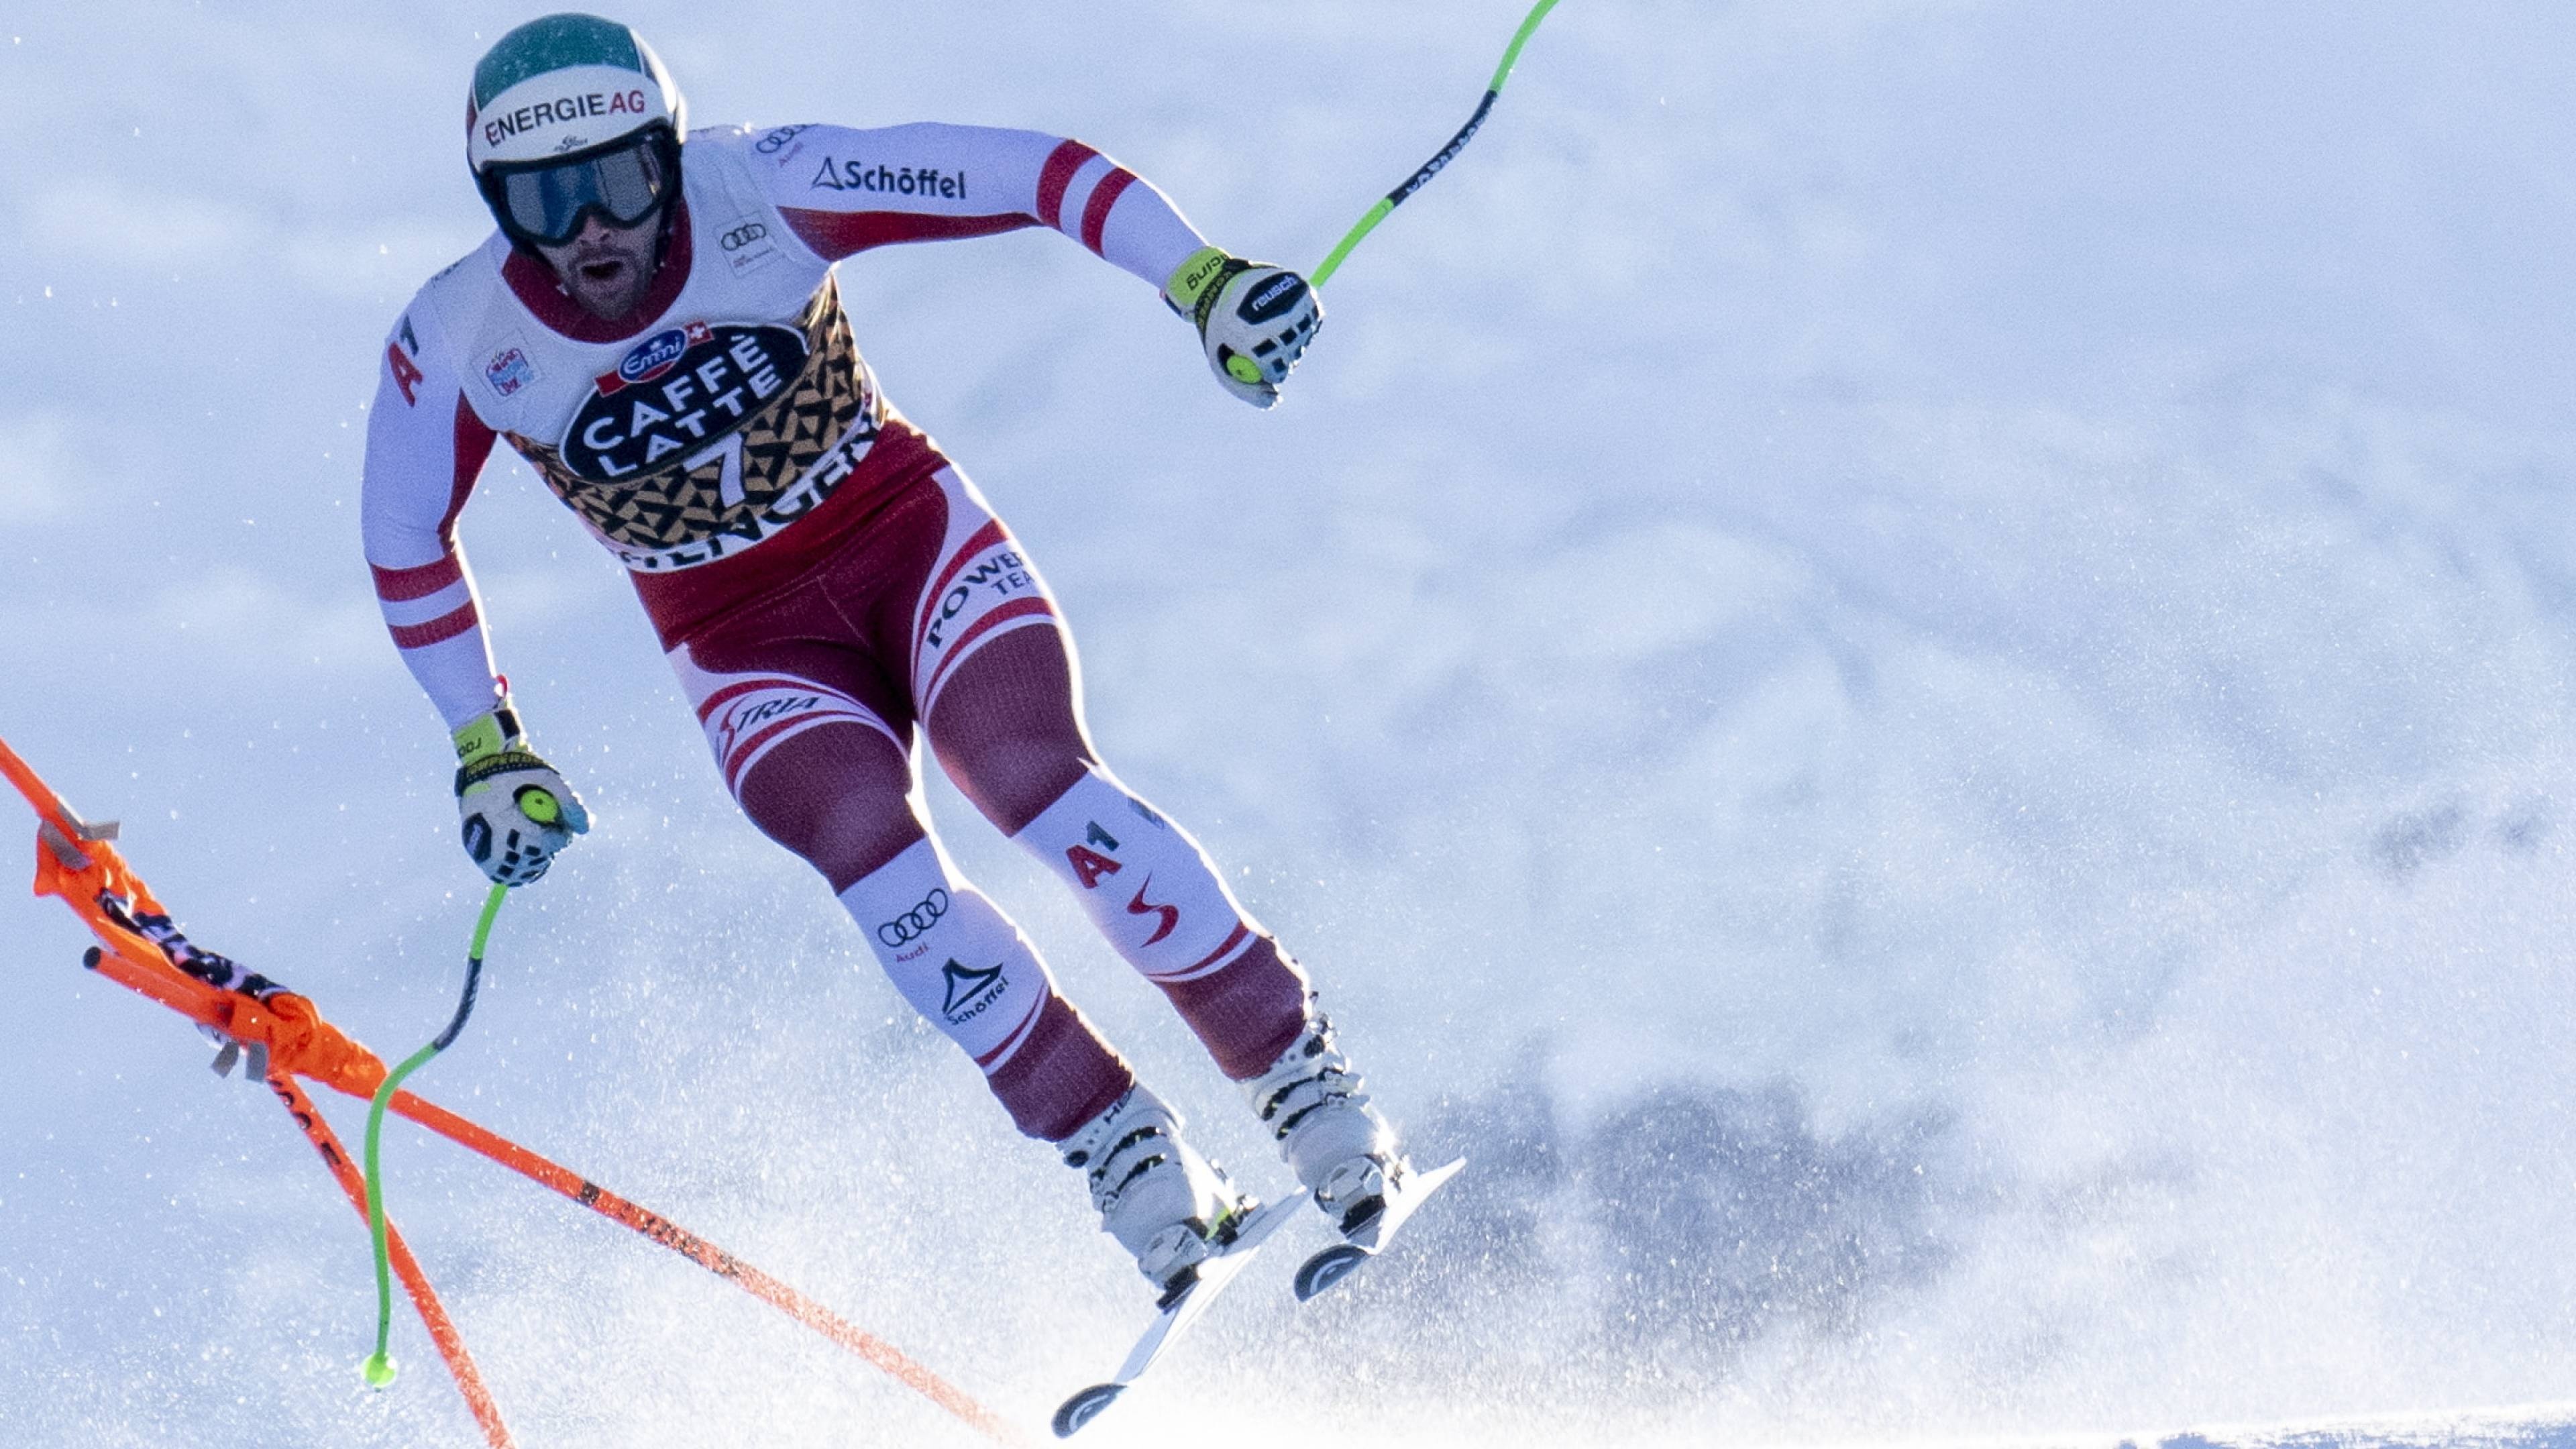 Slalom: The sport of gliding on snow, An alpine skiing discipline, Downhill. 3840x2160 4K Wallpaper.